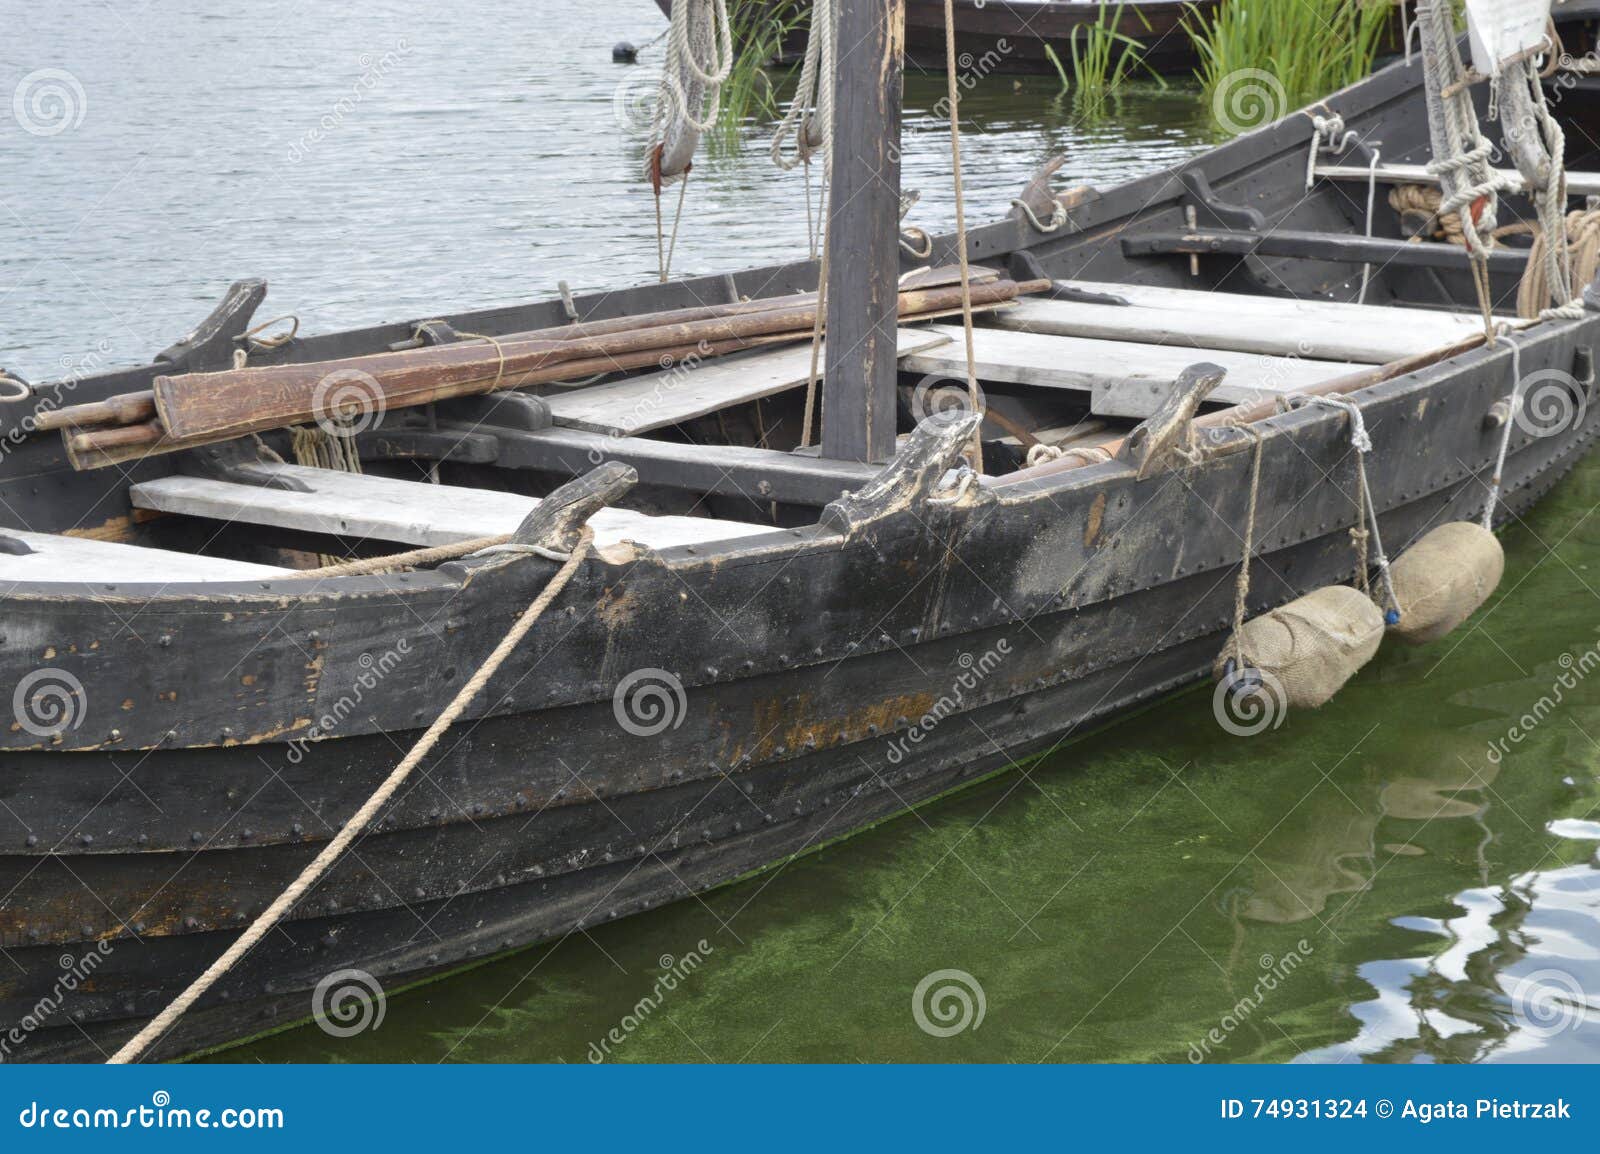 historic wooden boat